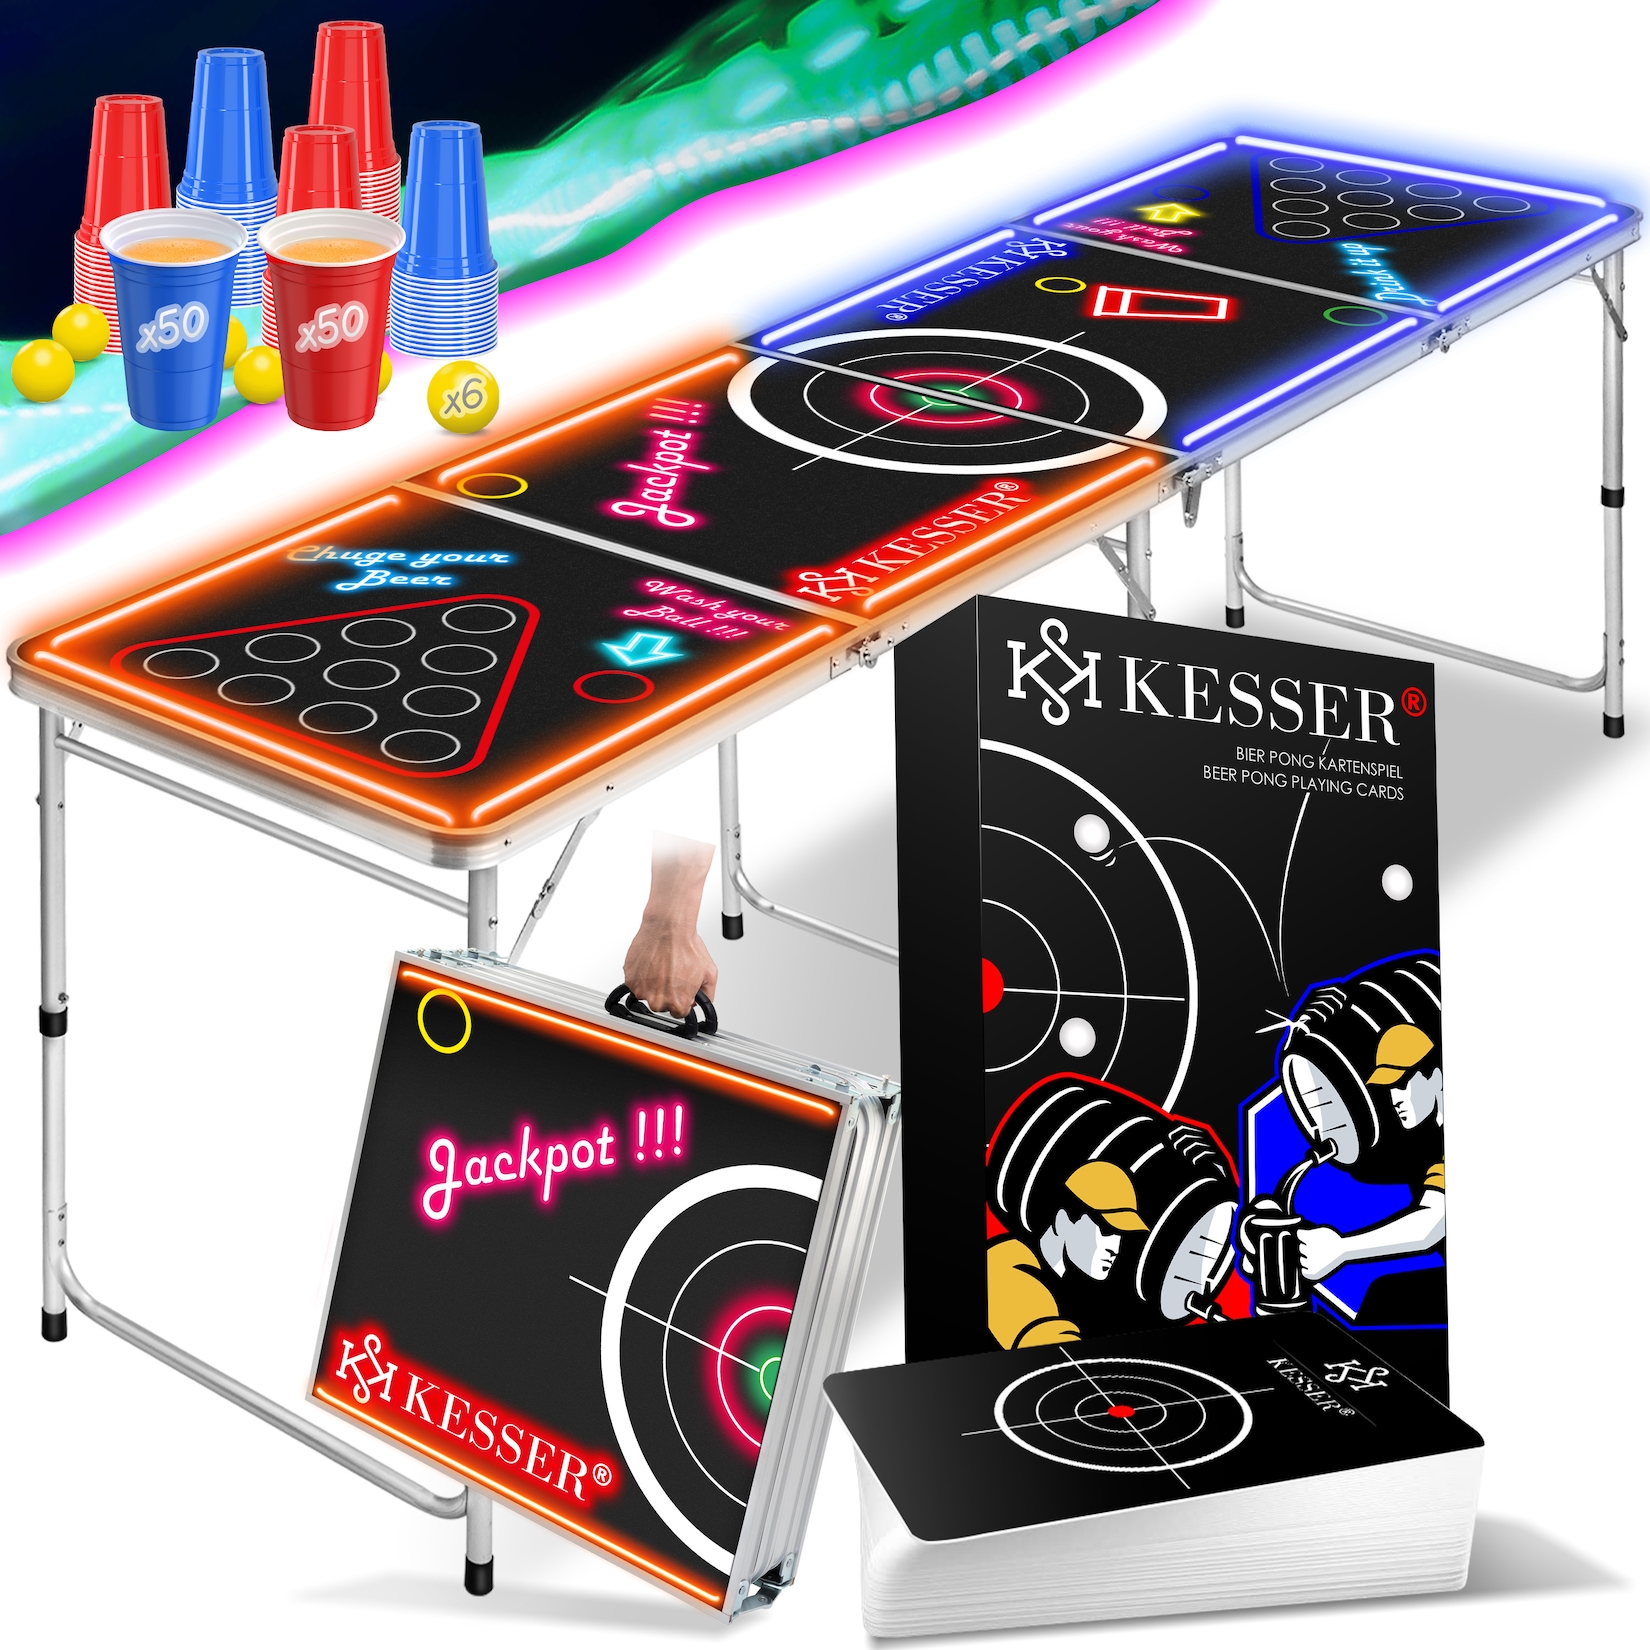 KESSER® Beer Pong Tisch Set mit Kartenspiel Trinkspiel - inkl. 100 Becher (50 Rot & 50 Blau), 6 Bälle + Regelwerk Partys